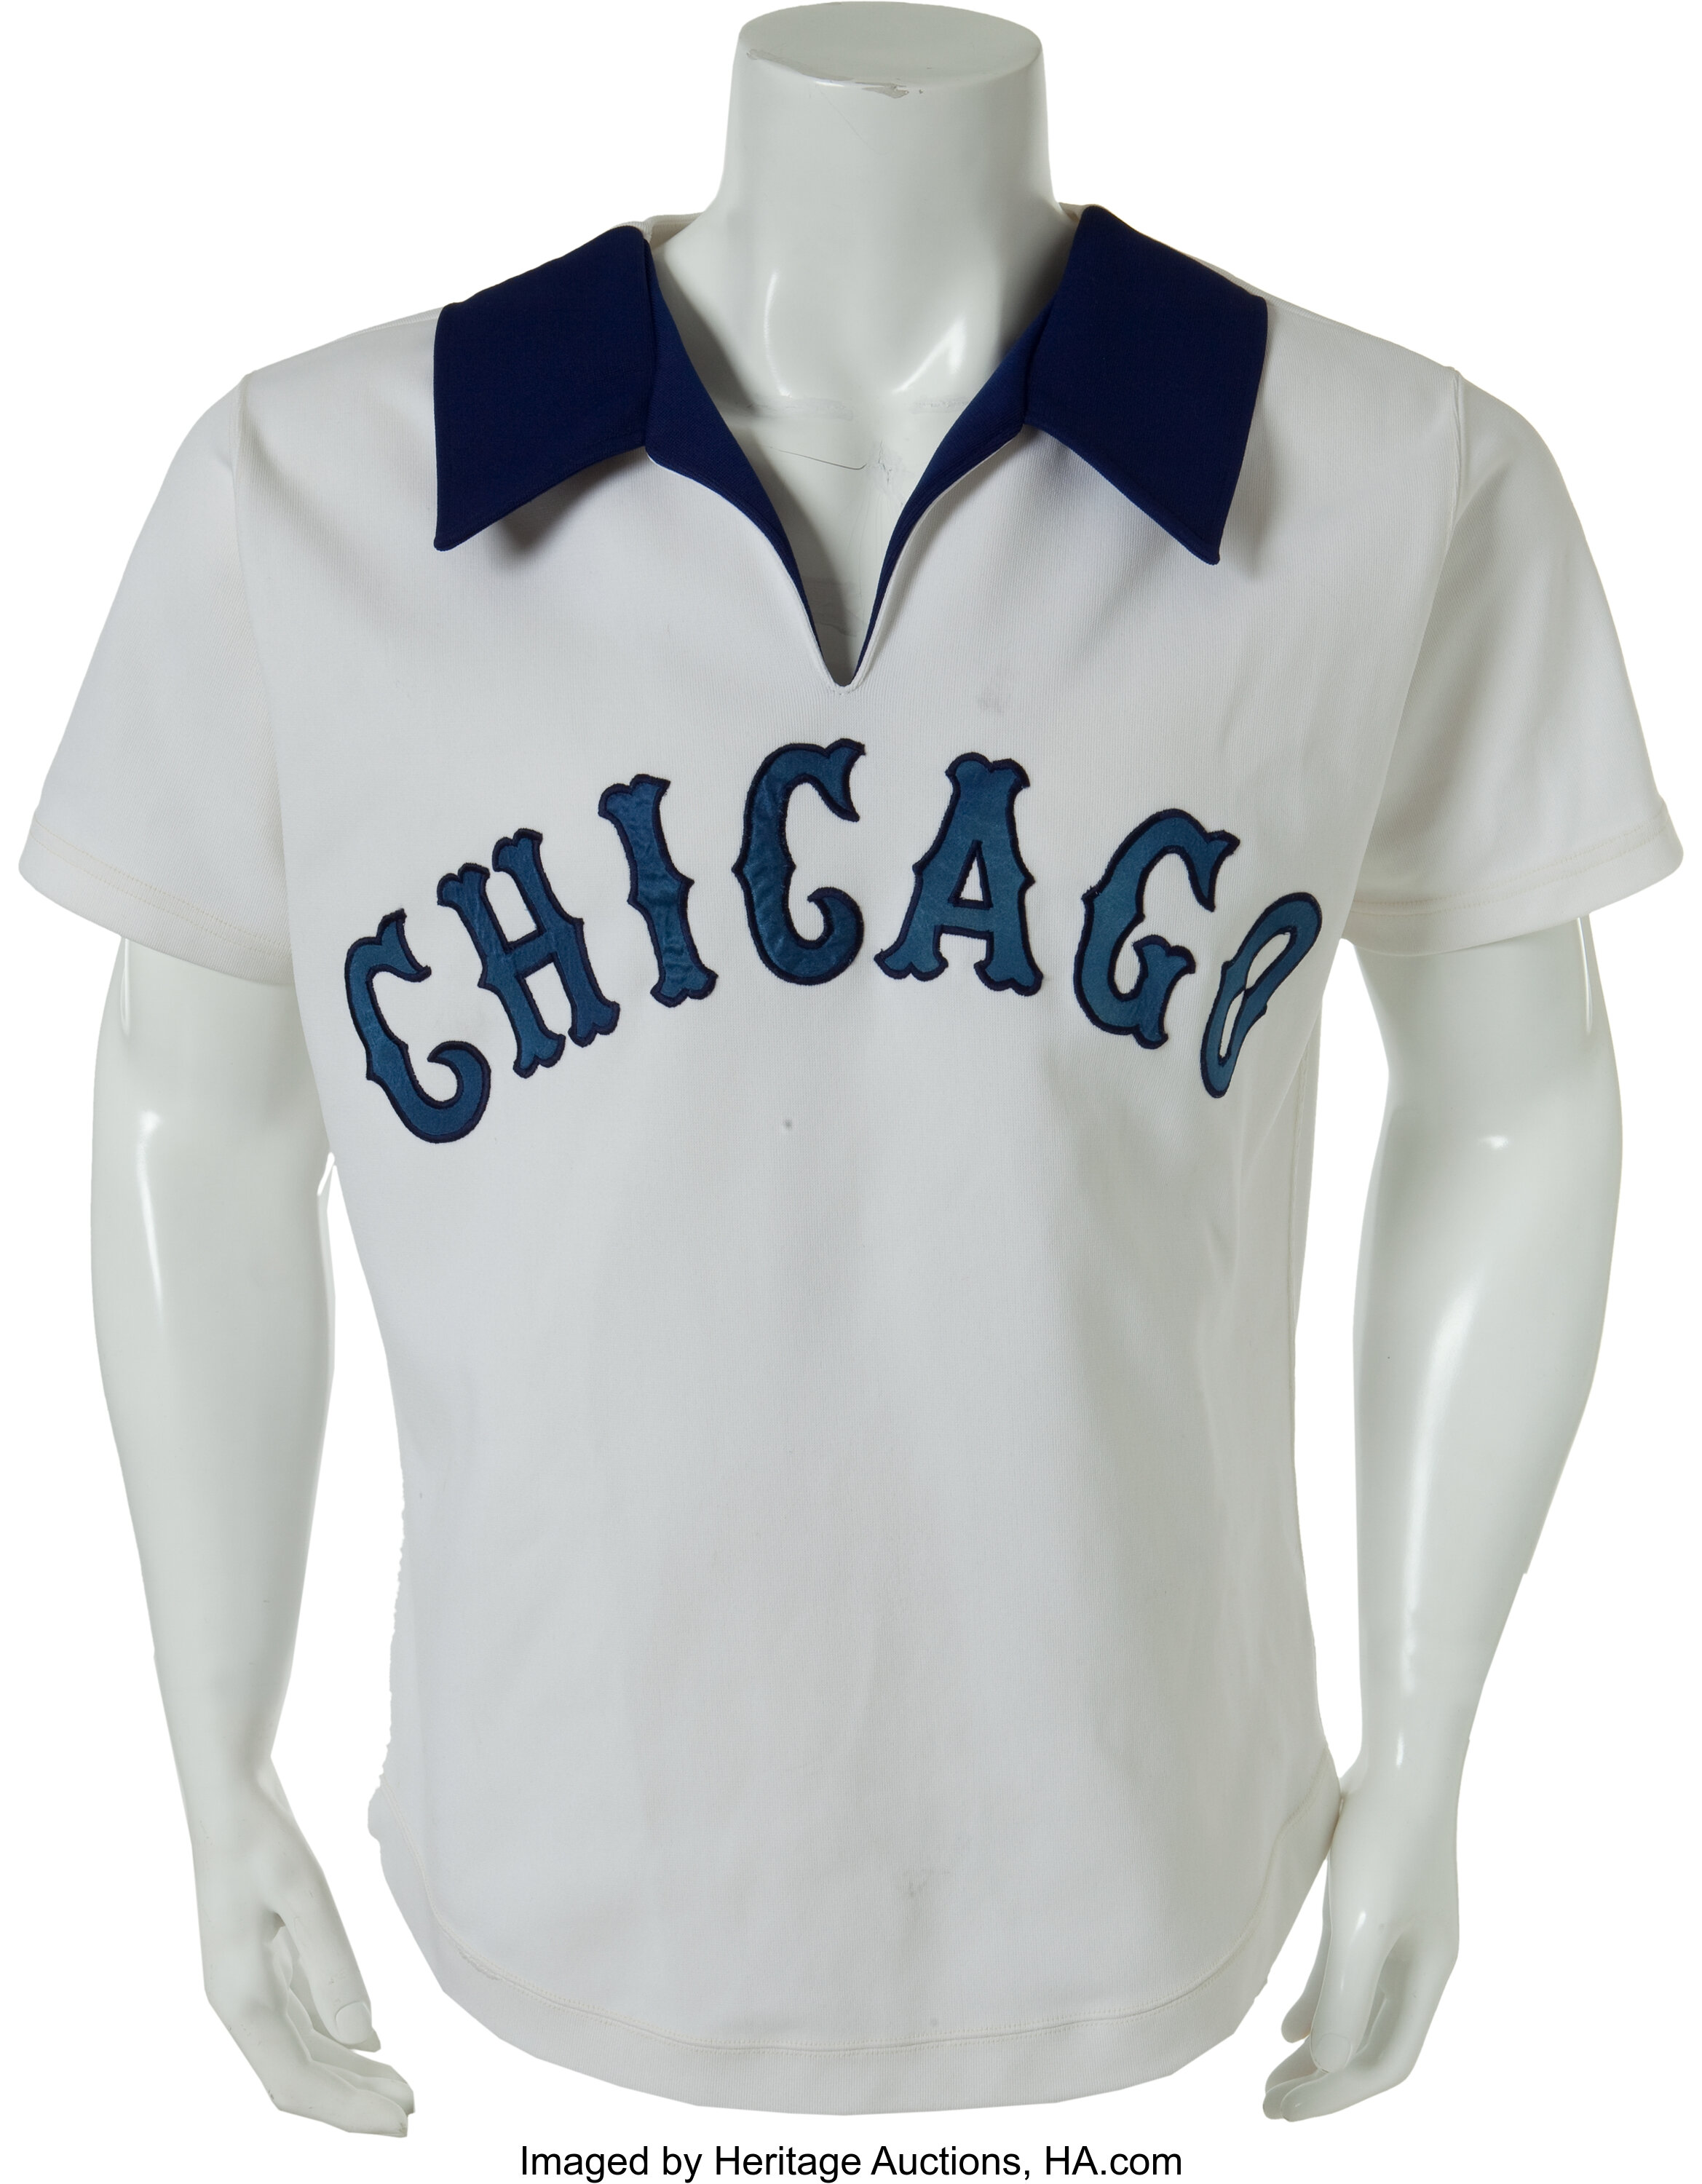 1971 white sox jersey